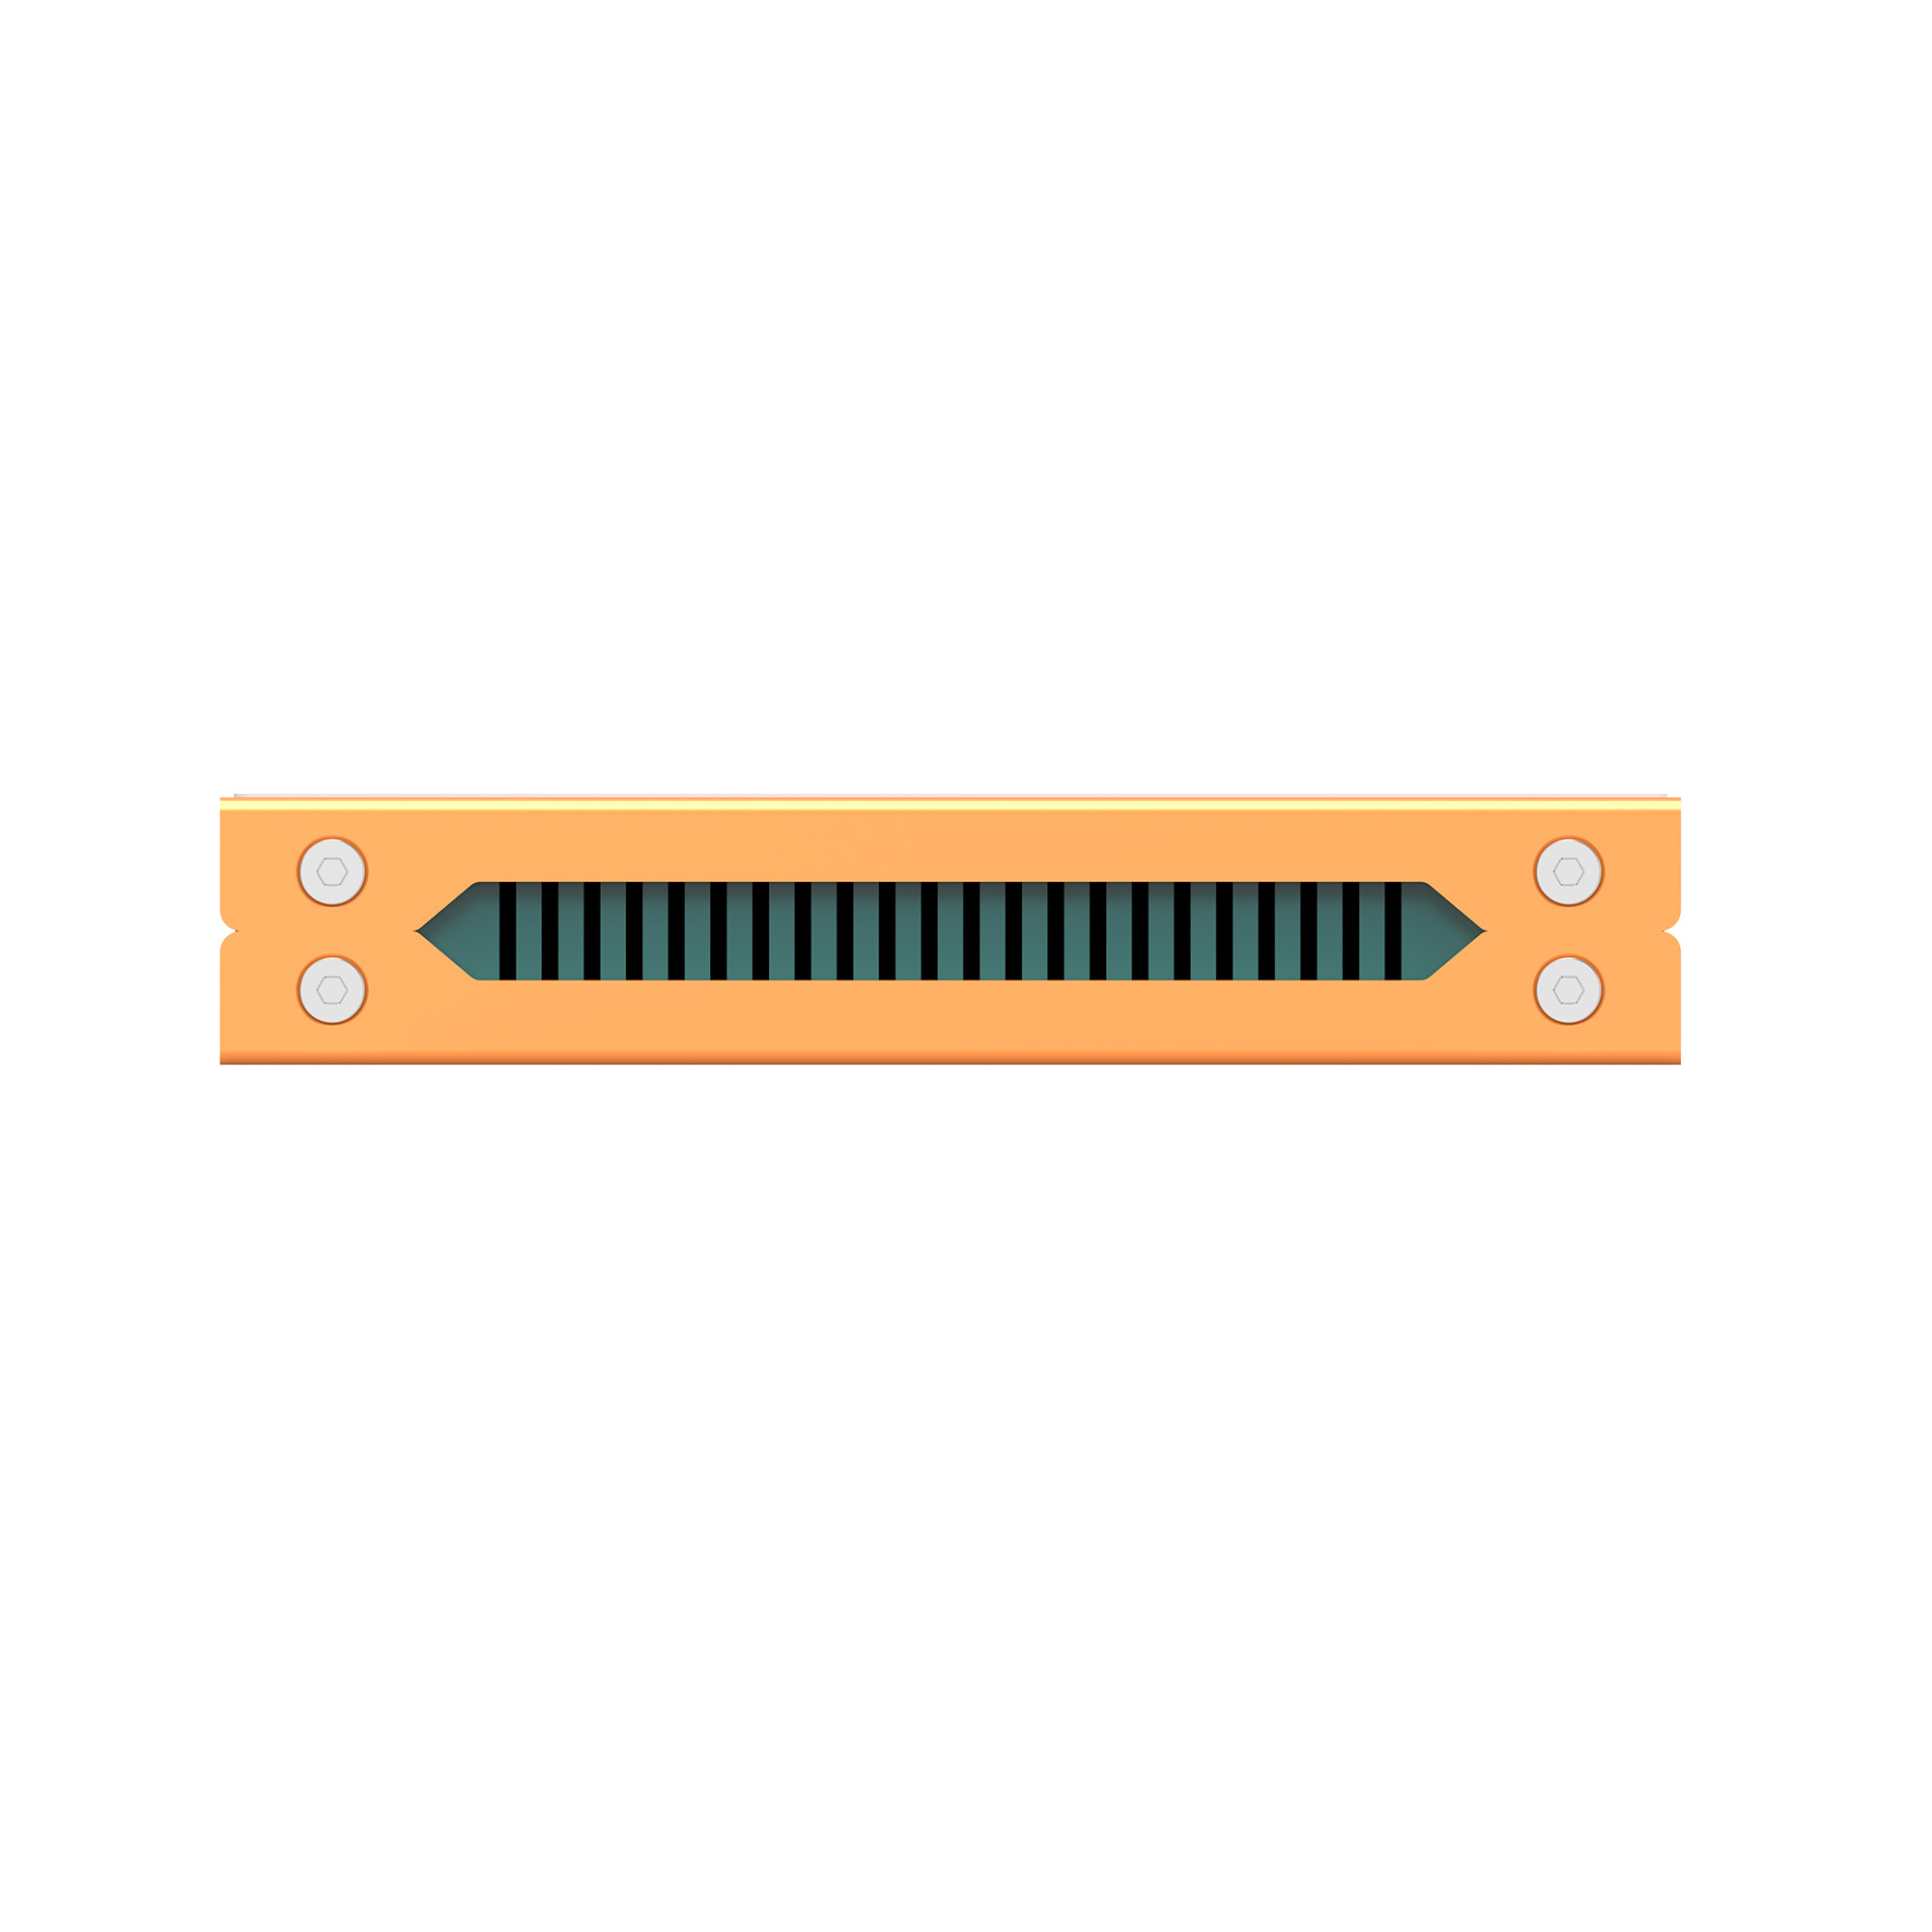 UC1218-4K  כרטיס לכידת וידיאו כניסת HDMI-4K חיצוני ל - USB 3.1 מבית AVMATRIX